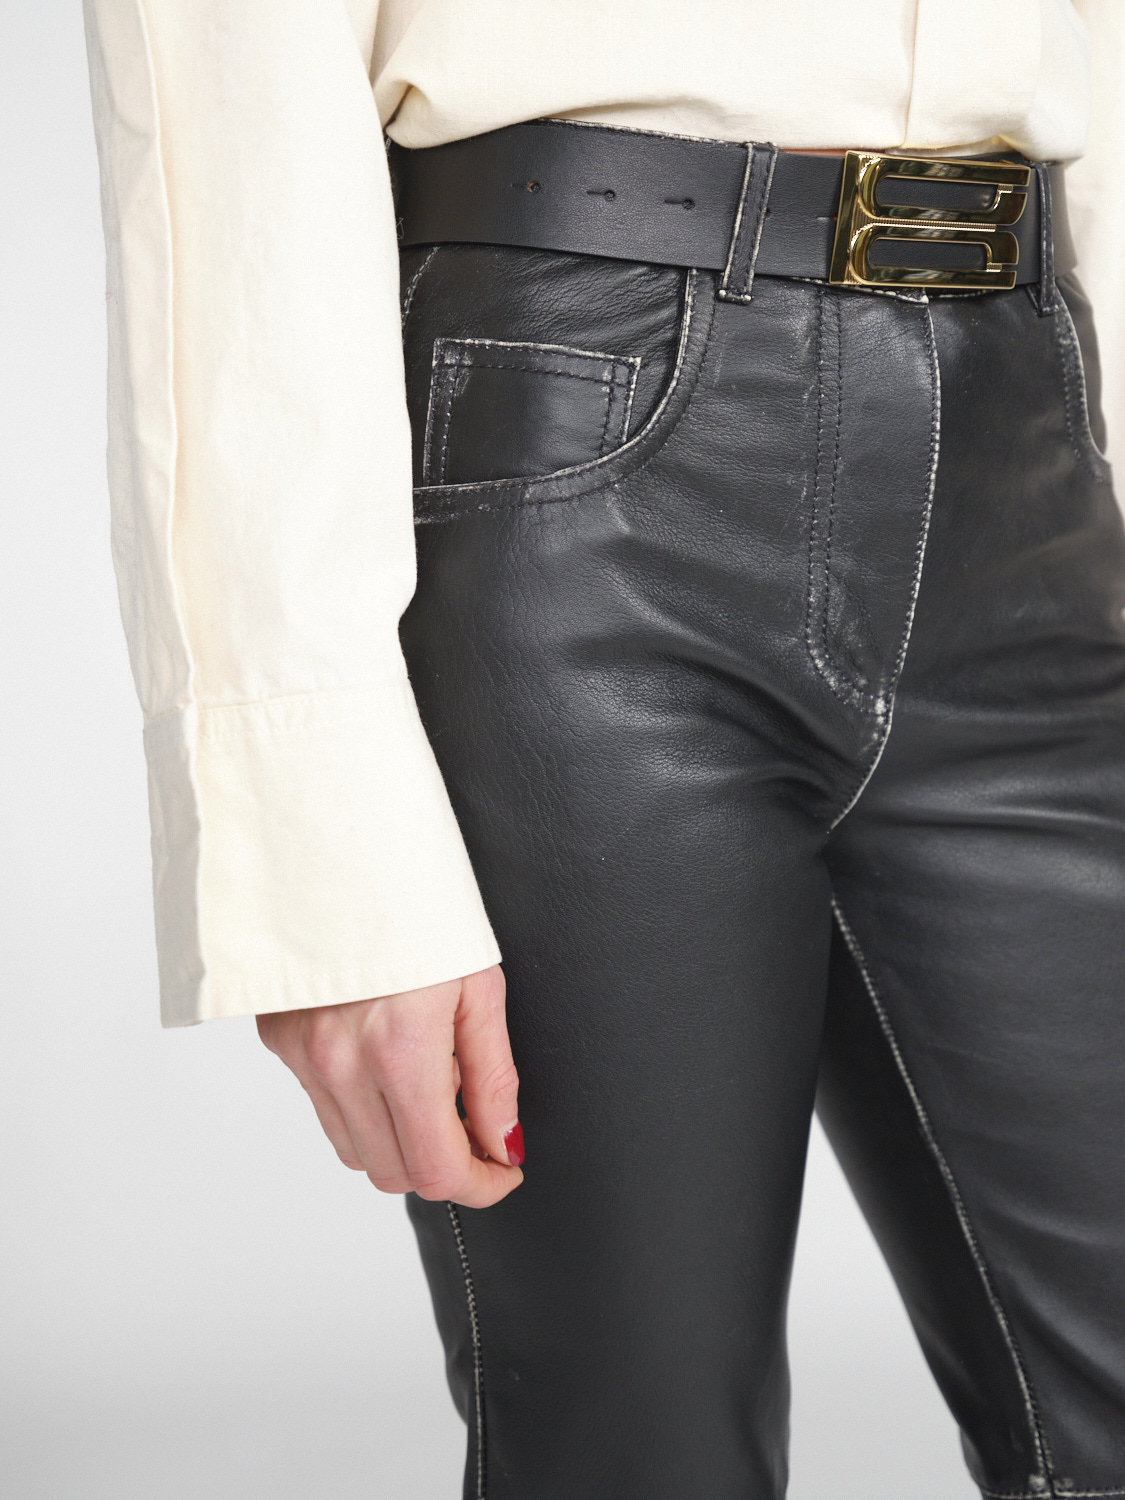 Victoria Beckham Jumbo Frame - Leather belt with gold-coloured buckle  black S